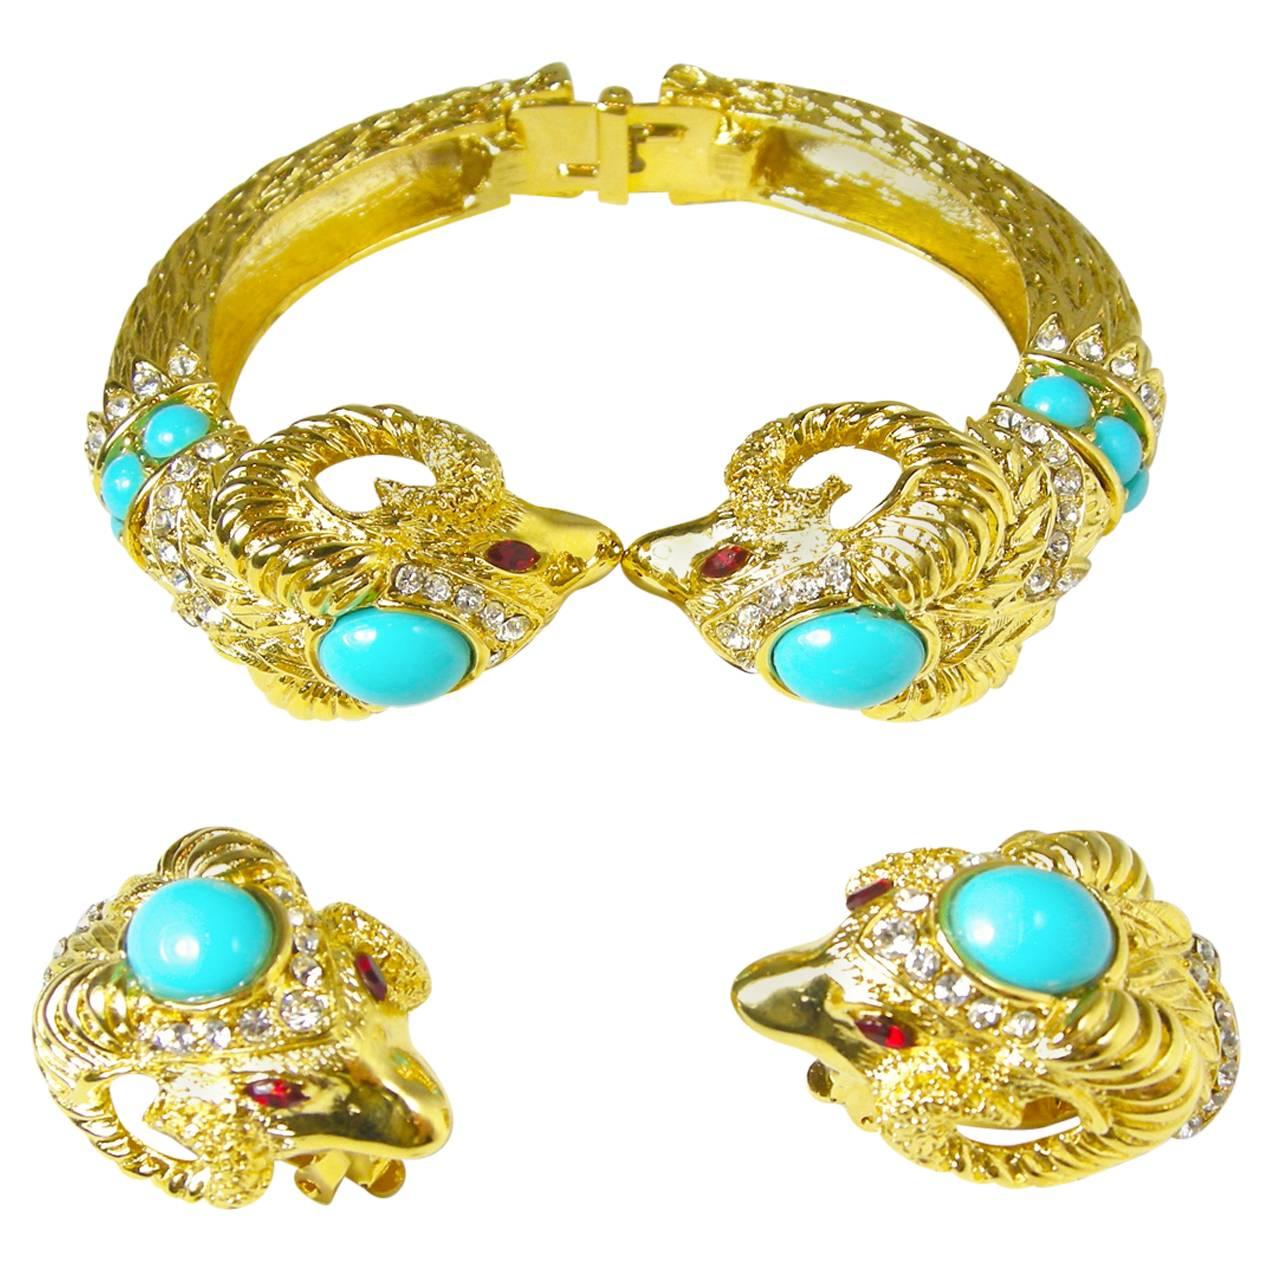 Kenneth Jay Lane Turquoise Ram Bracelet & Earrings Set